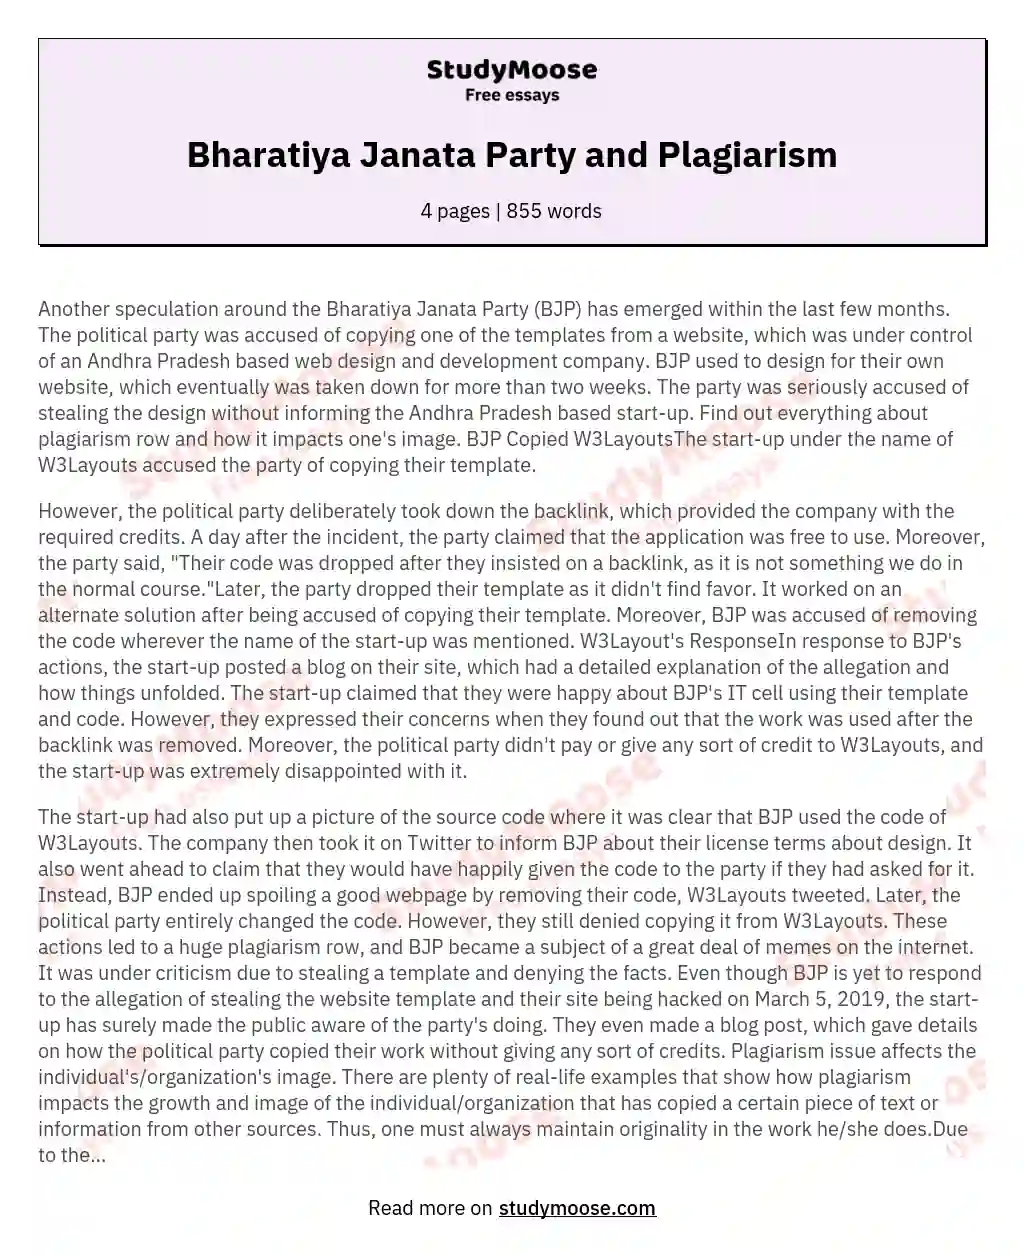 Bharatiya Janata Party and Plagiarism essay